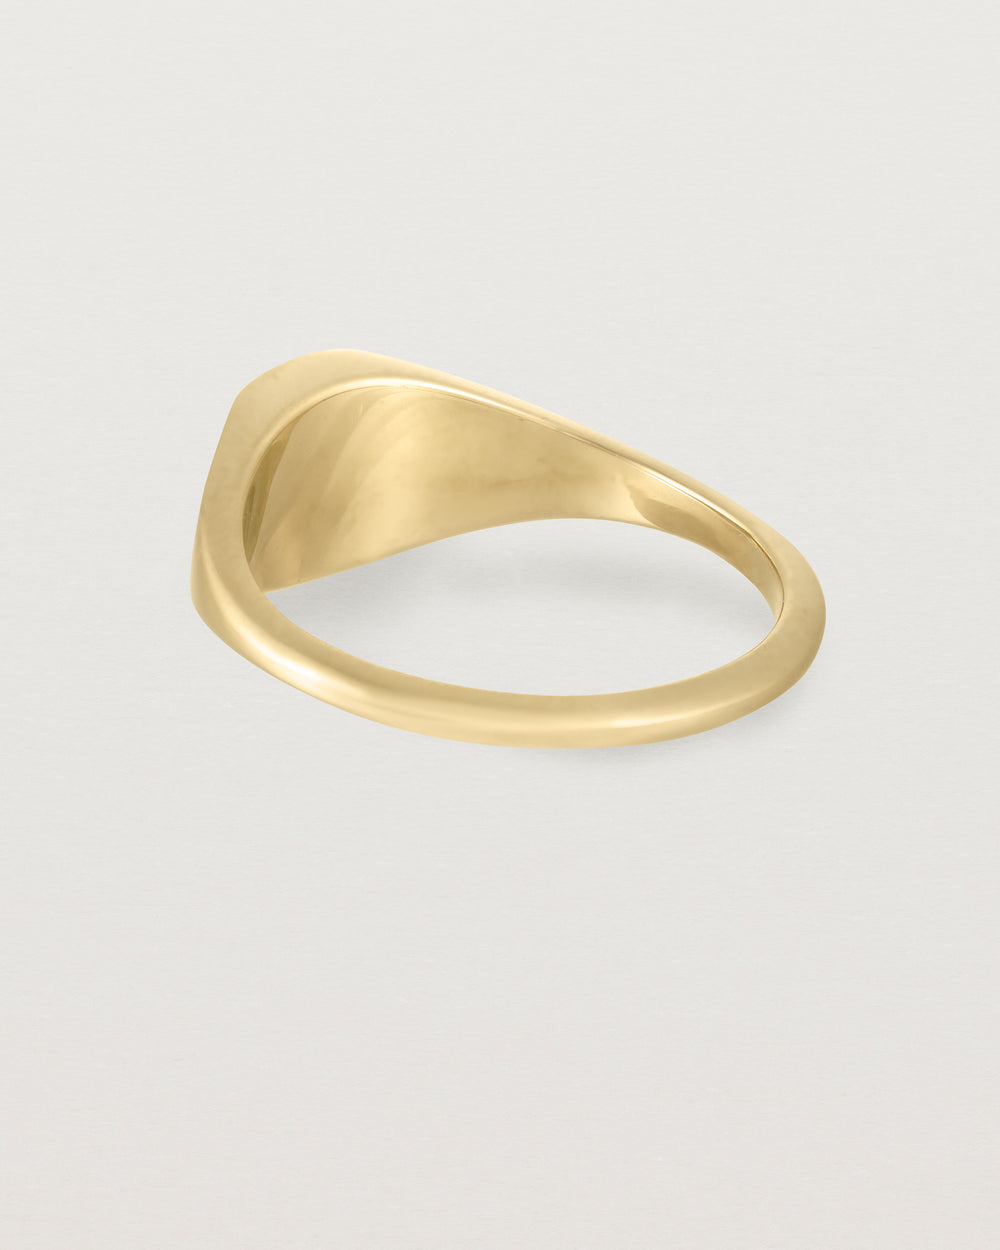 Shop Signet Rings - Custom Signets & Gold Rings - Natalie Marie Jewellery